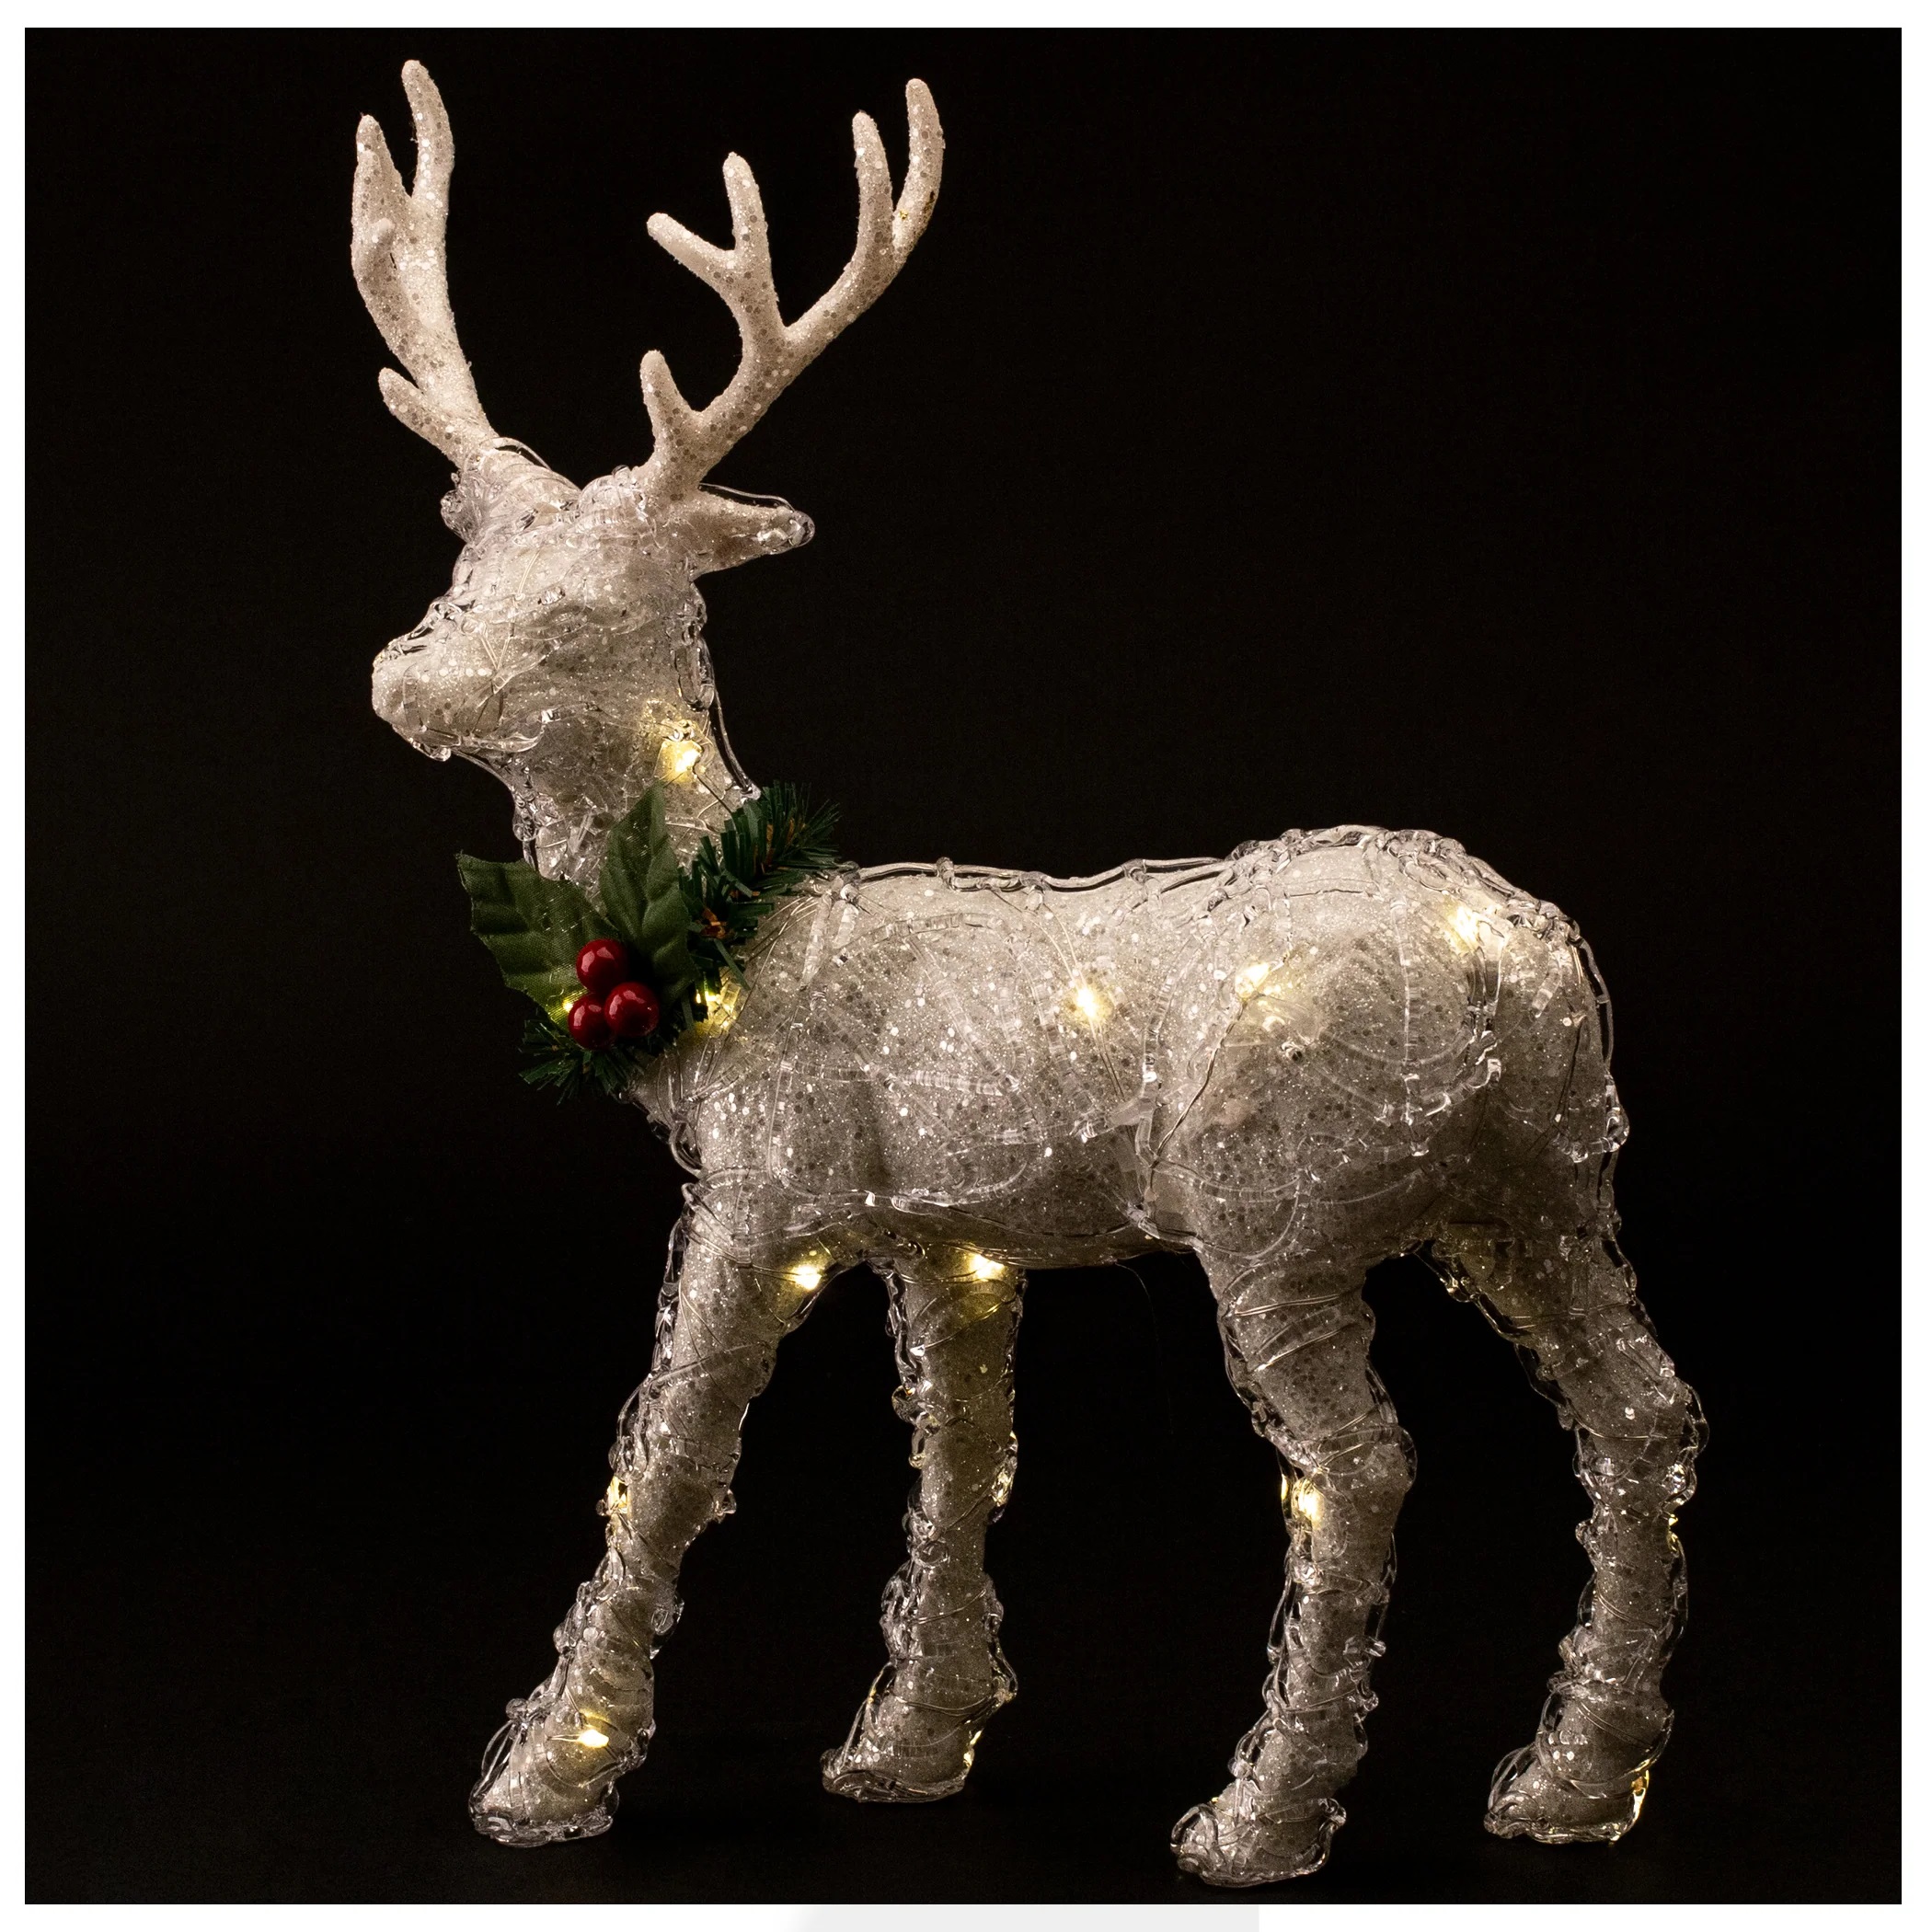 20 x Light up Christmas Reindeer Figurine - Large